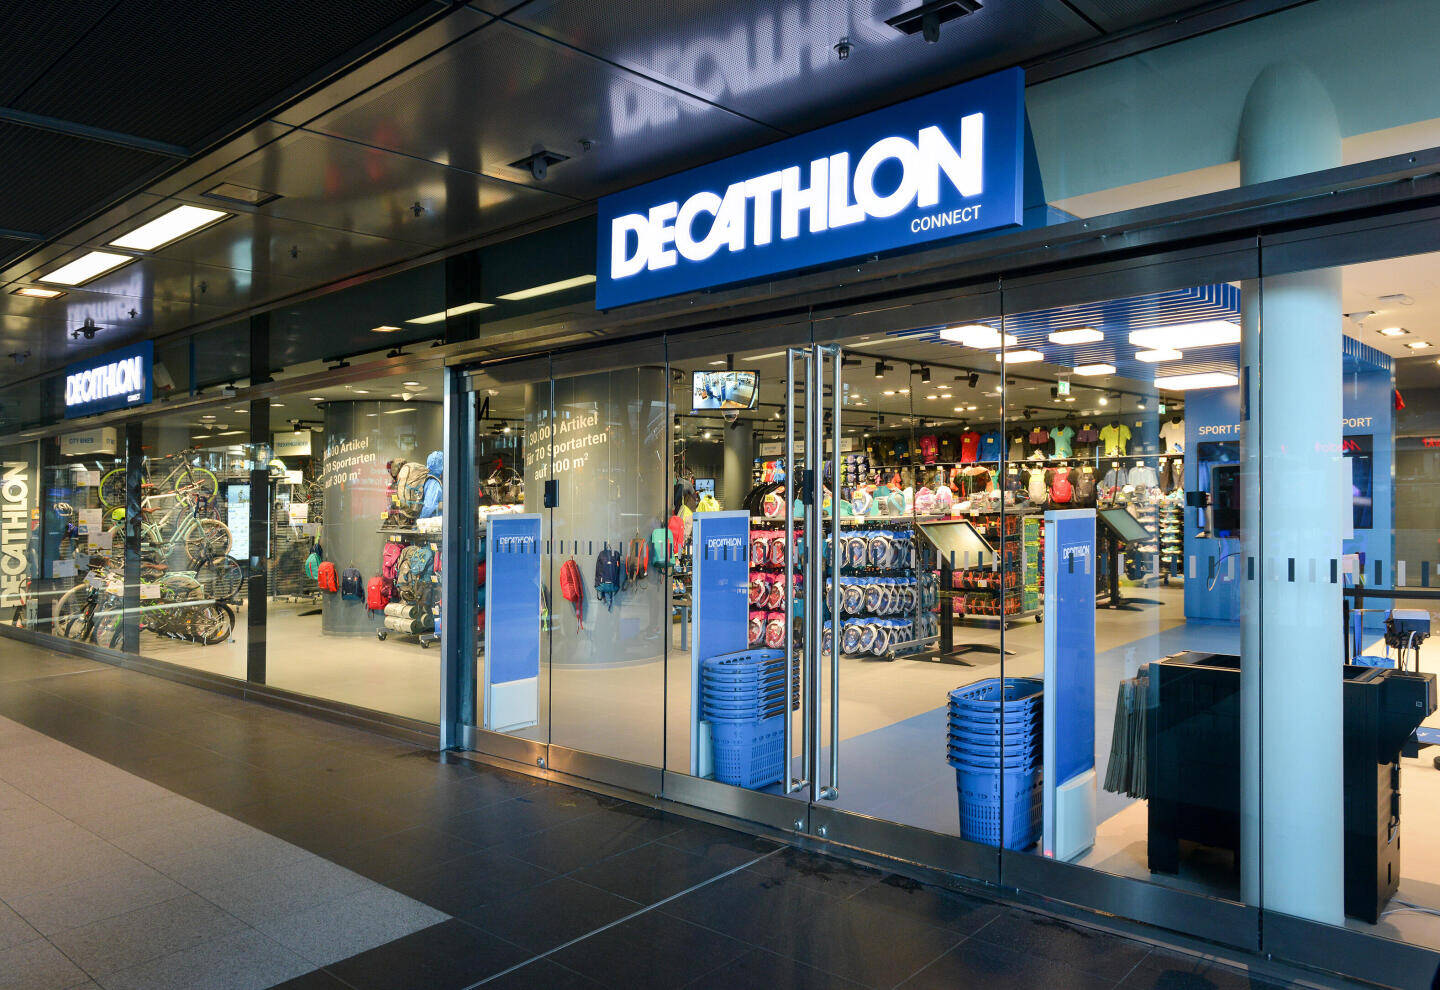 Decathlon Connect Filiale Berlin 